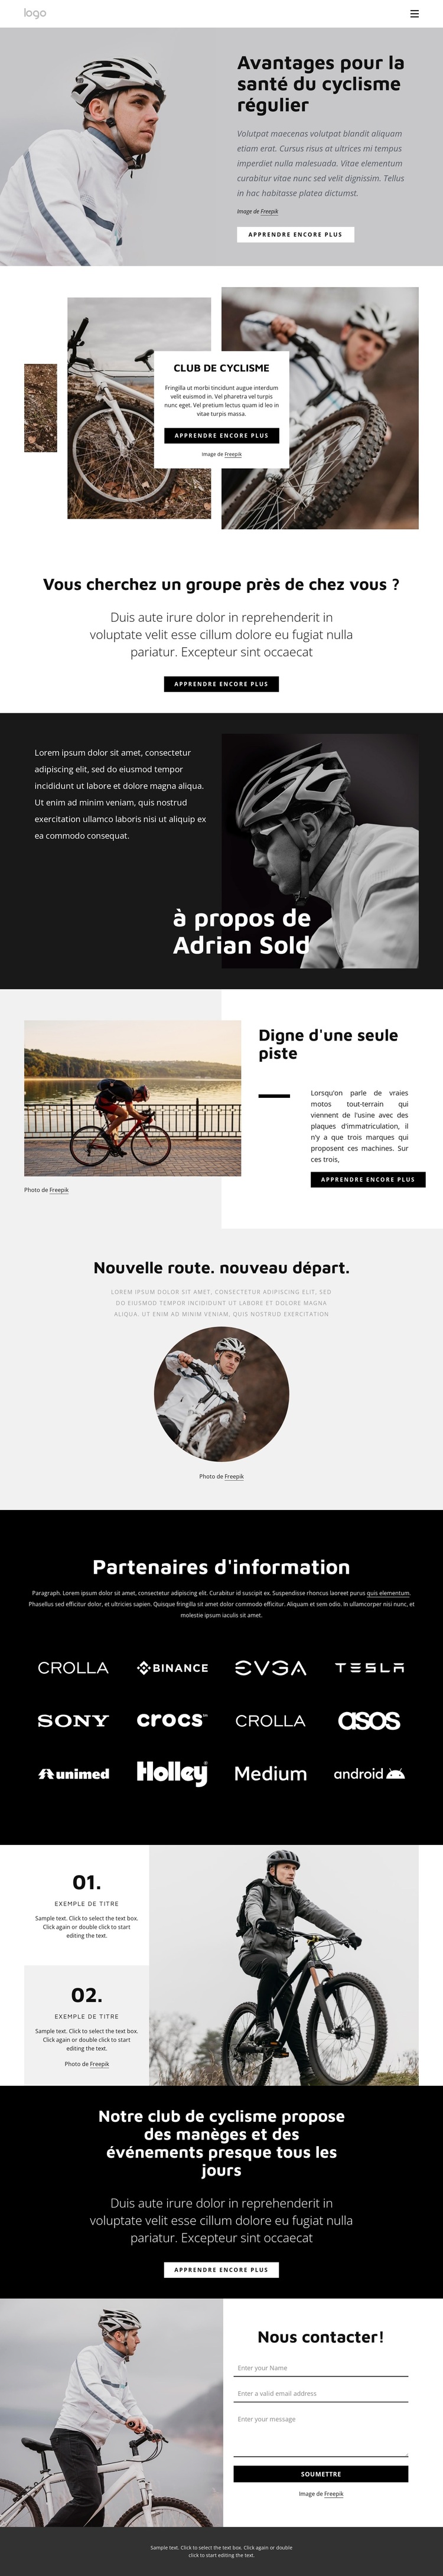 Avantages du cyclisme régulier Thème WordPress